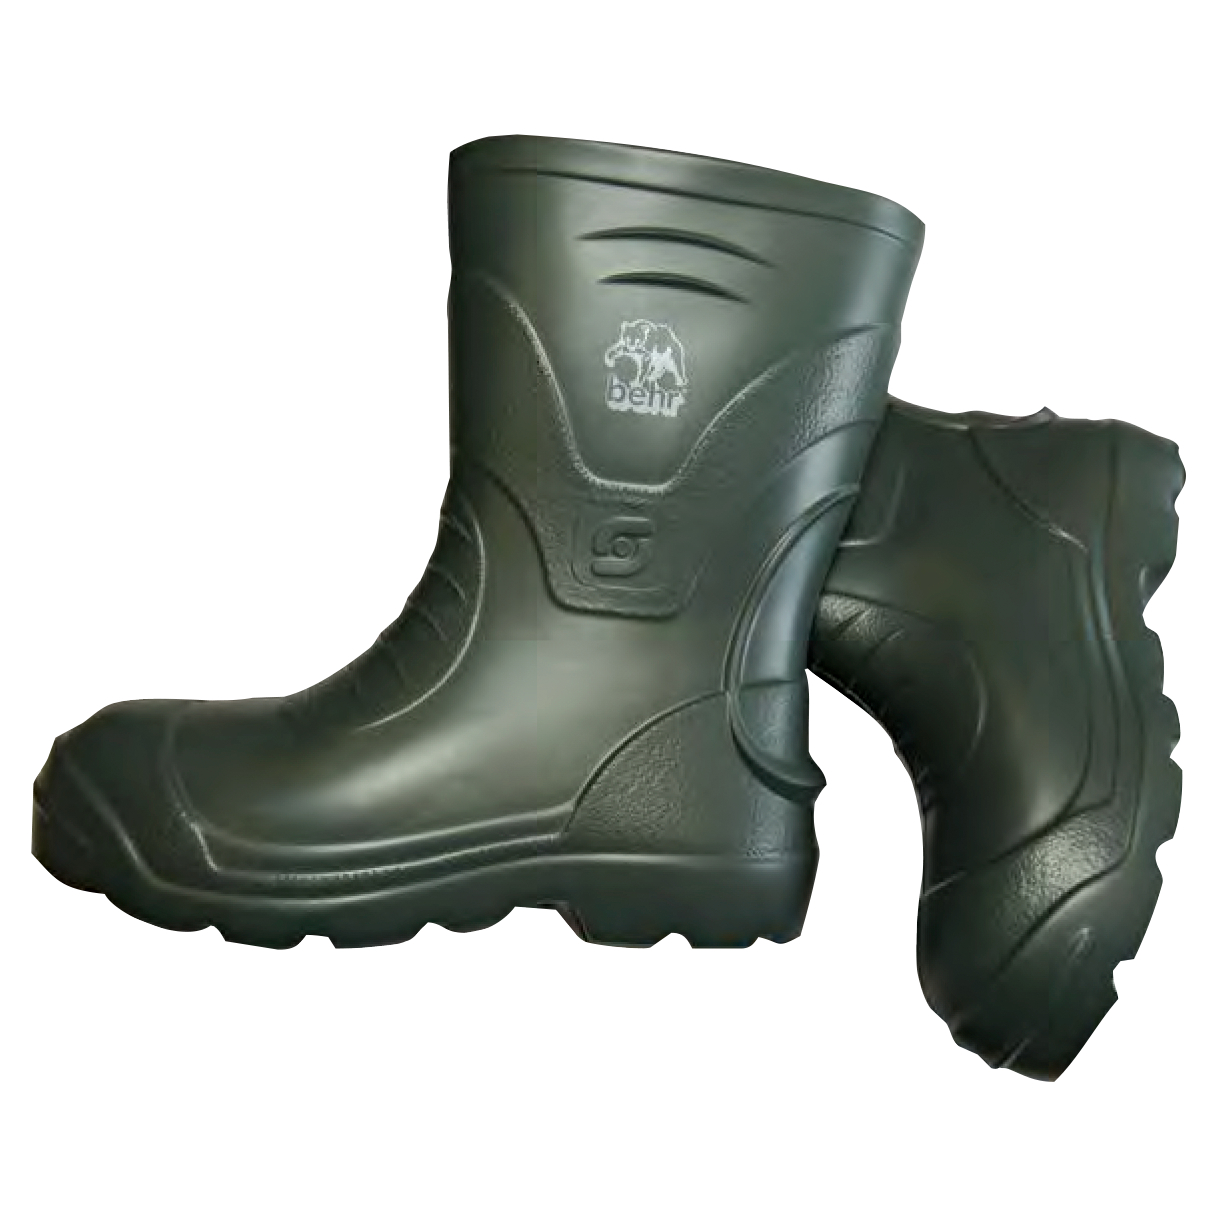 https://images.askari-sport.com/en/product/1/large/icebehr-mens-men-rubber-boots-all-season-1673359502.jpg